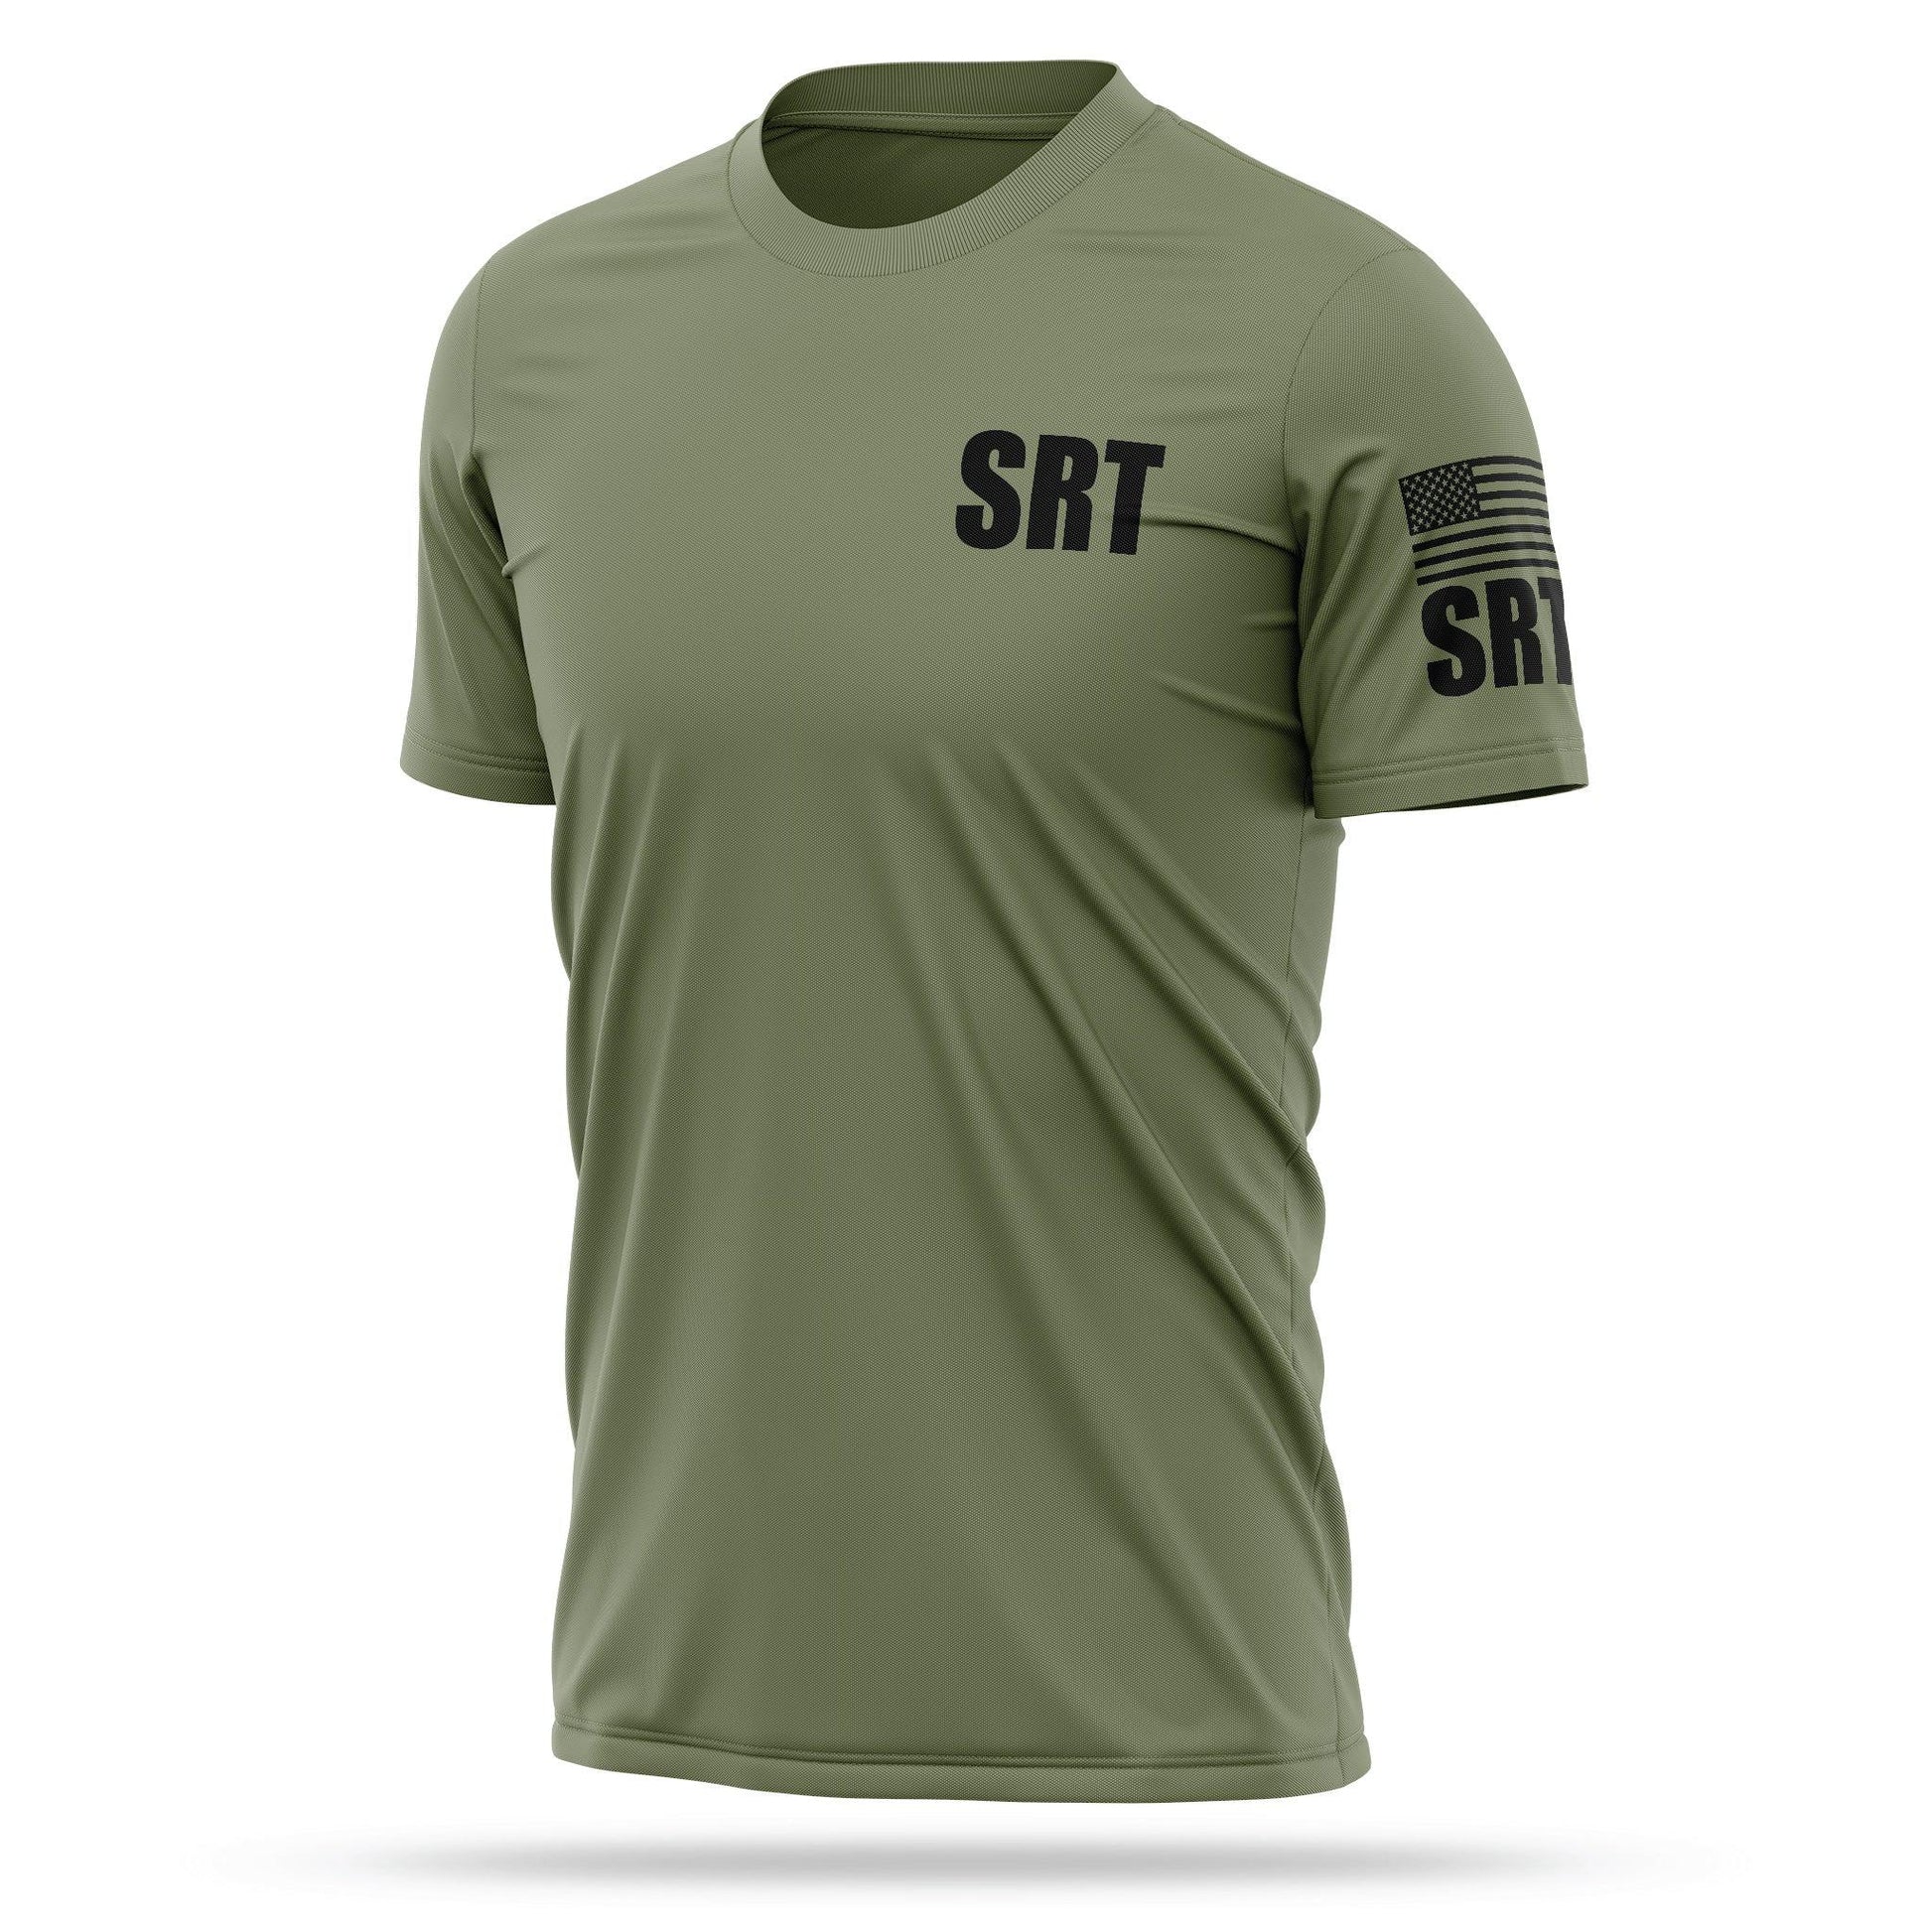 [SRT] Men's Utility Shirt [GRN/BLK]-13 Fifty Apparel